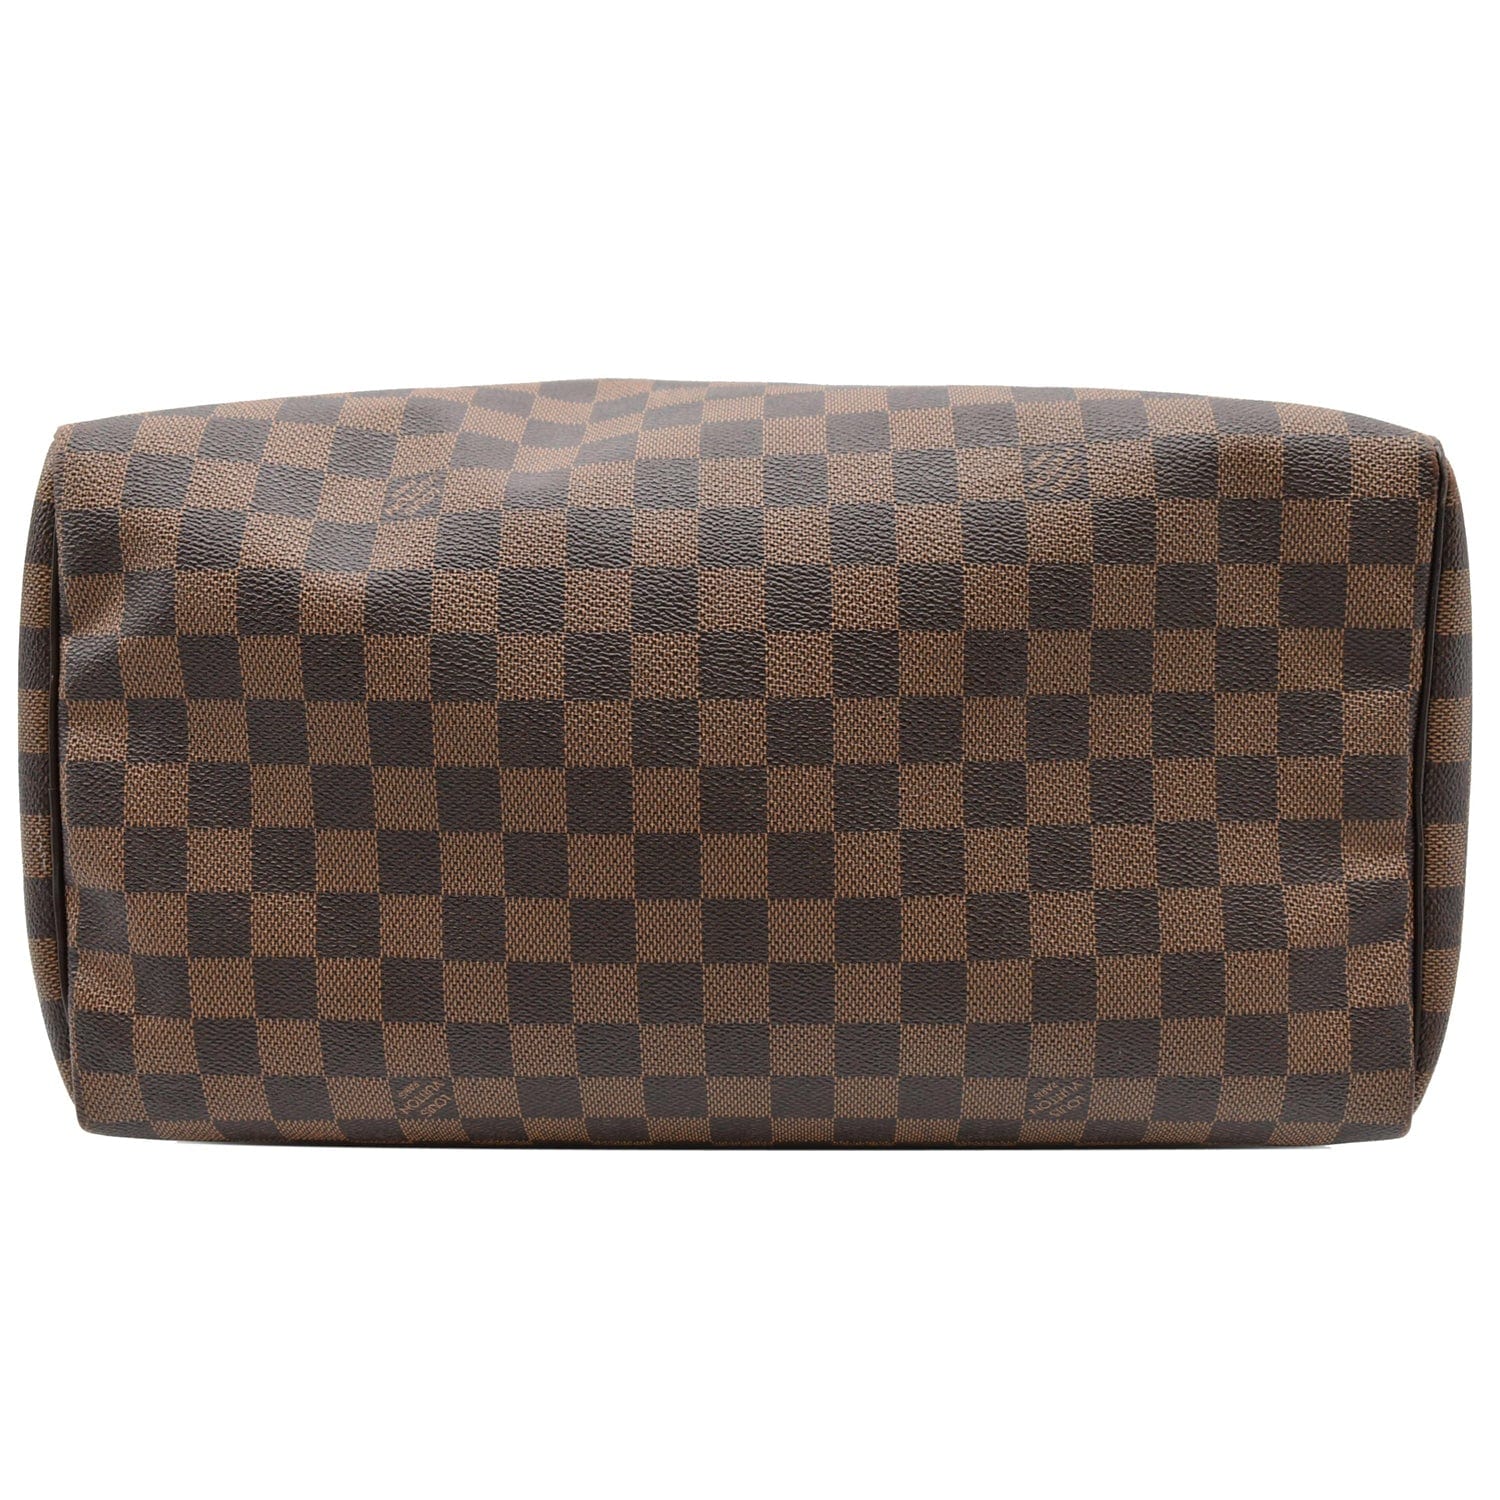 Louis Vuitton Speedy 35 Damier Ebene NM Handbag Purse (RI4193